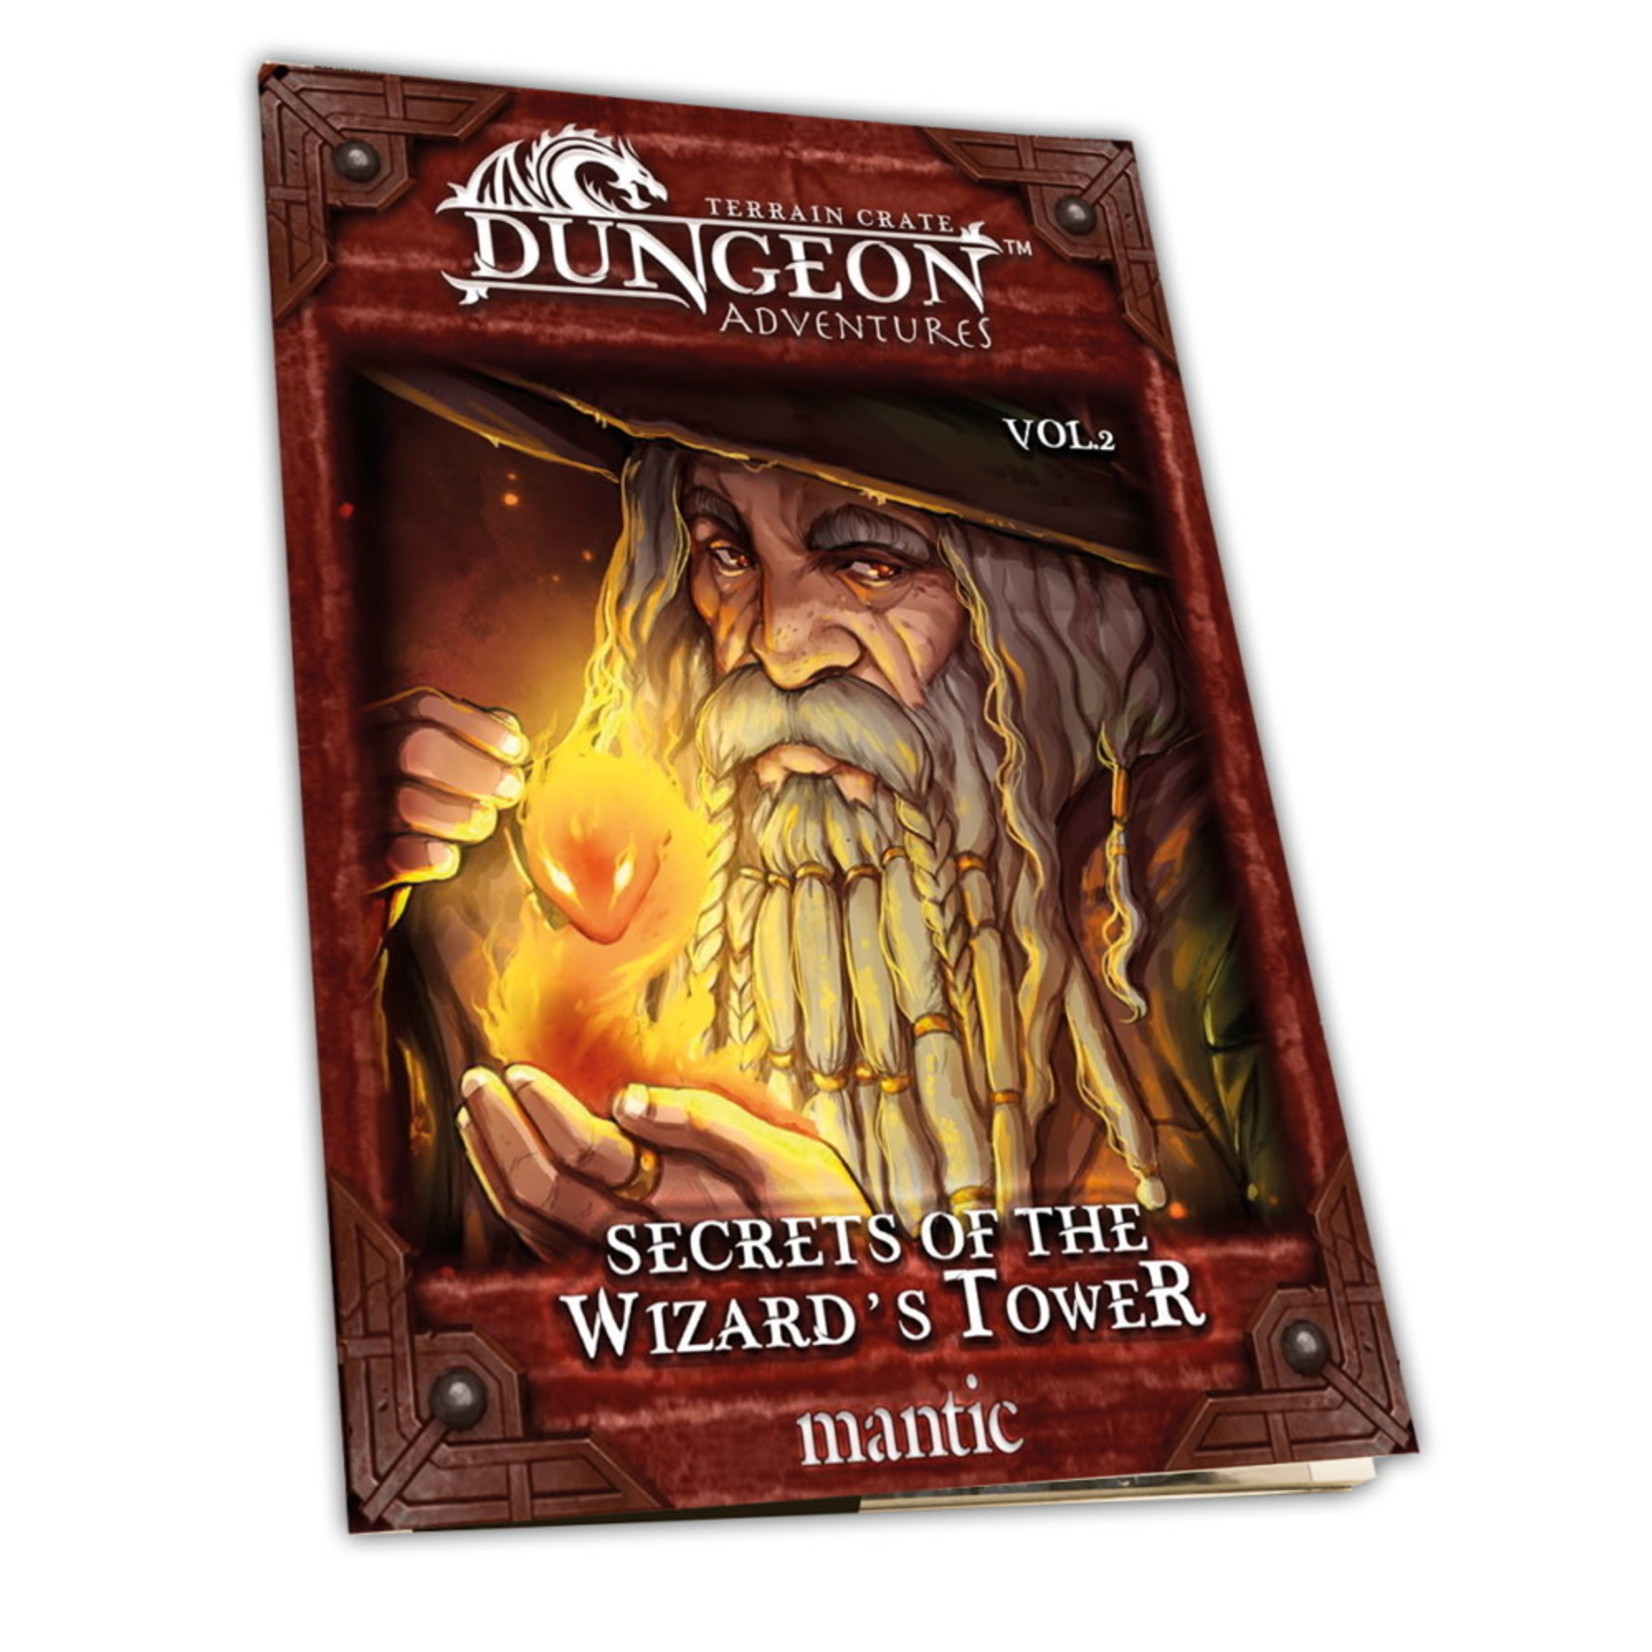 Mantic Entertainment TerrainCrate Dungeon Adventures: Secret's of the Wizard's Tower